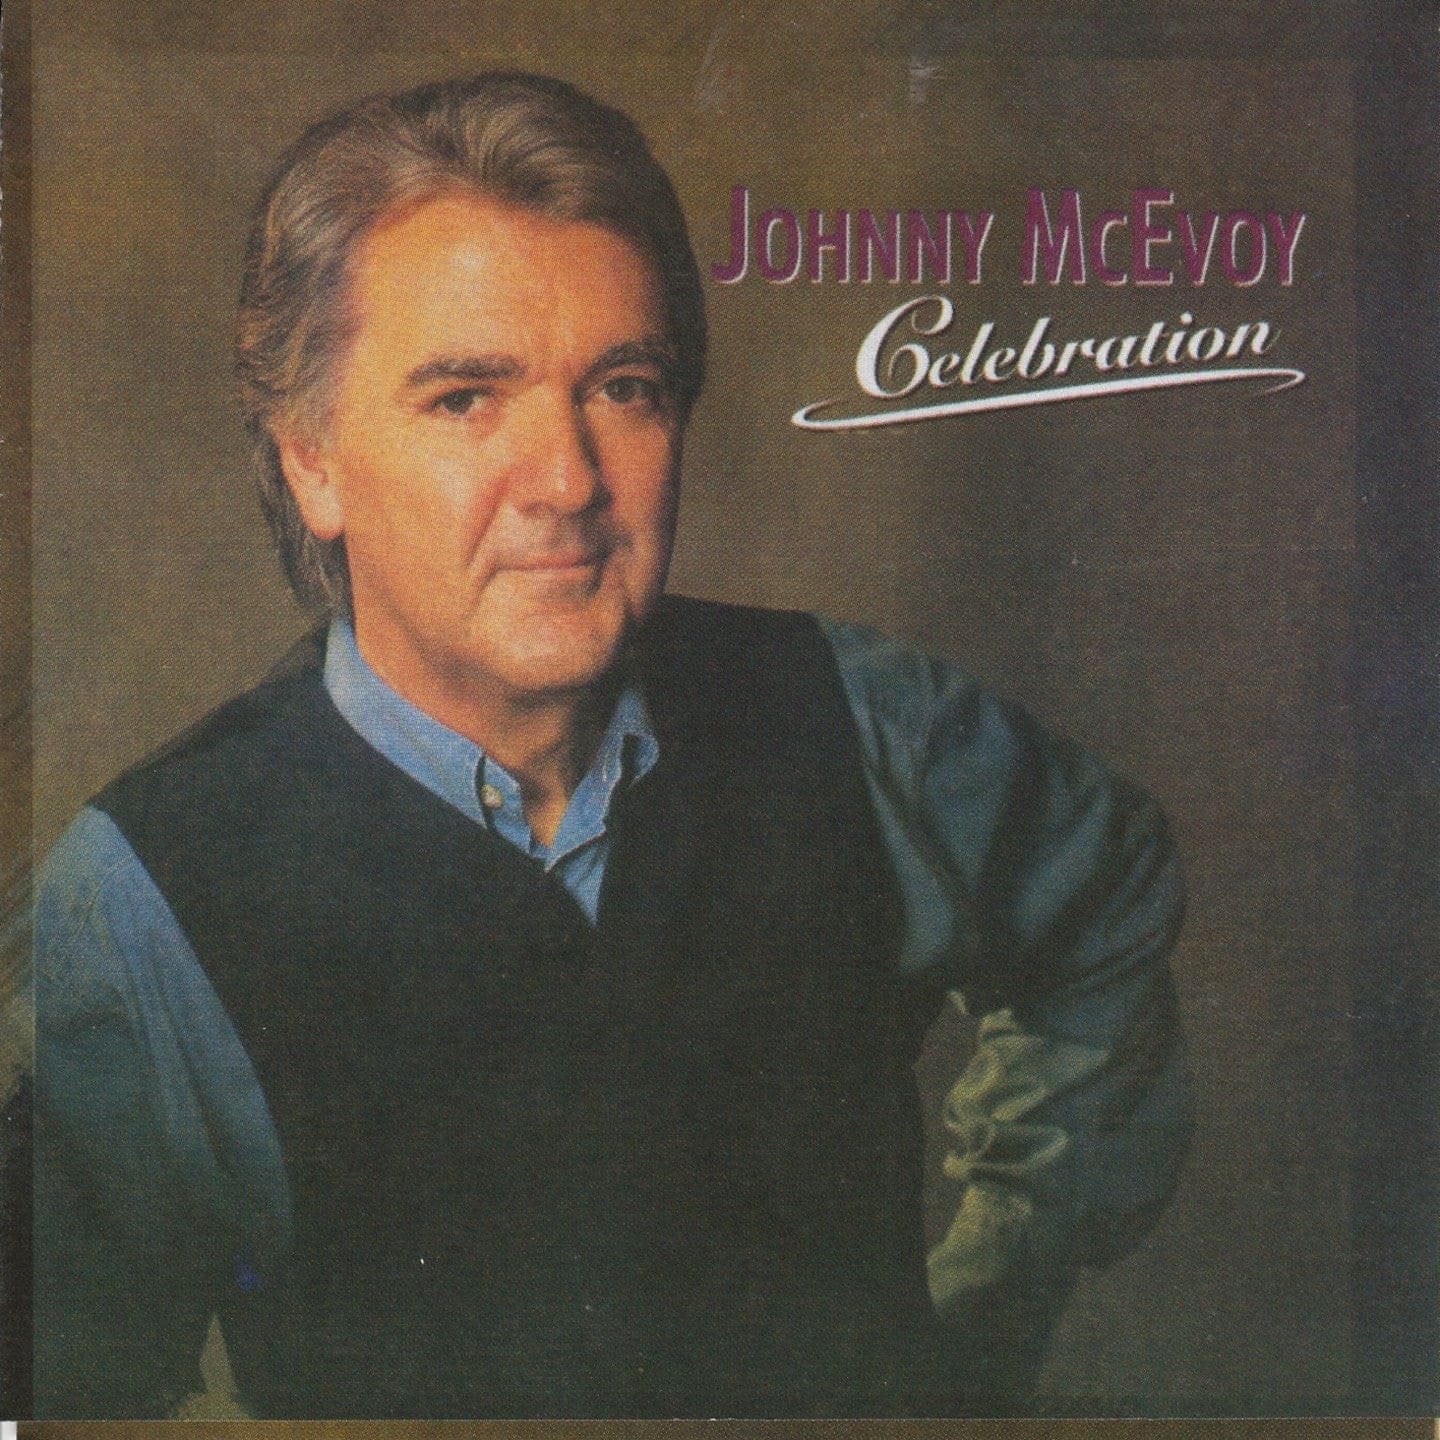 Celebration - Johnny McEvoy [2CD]